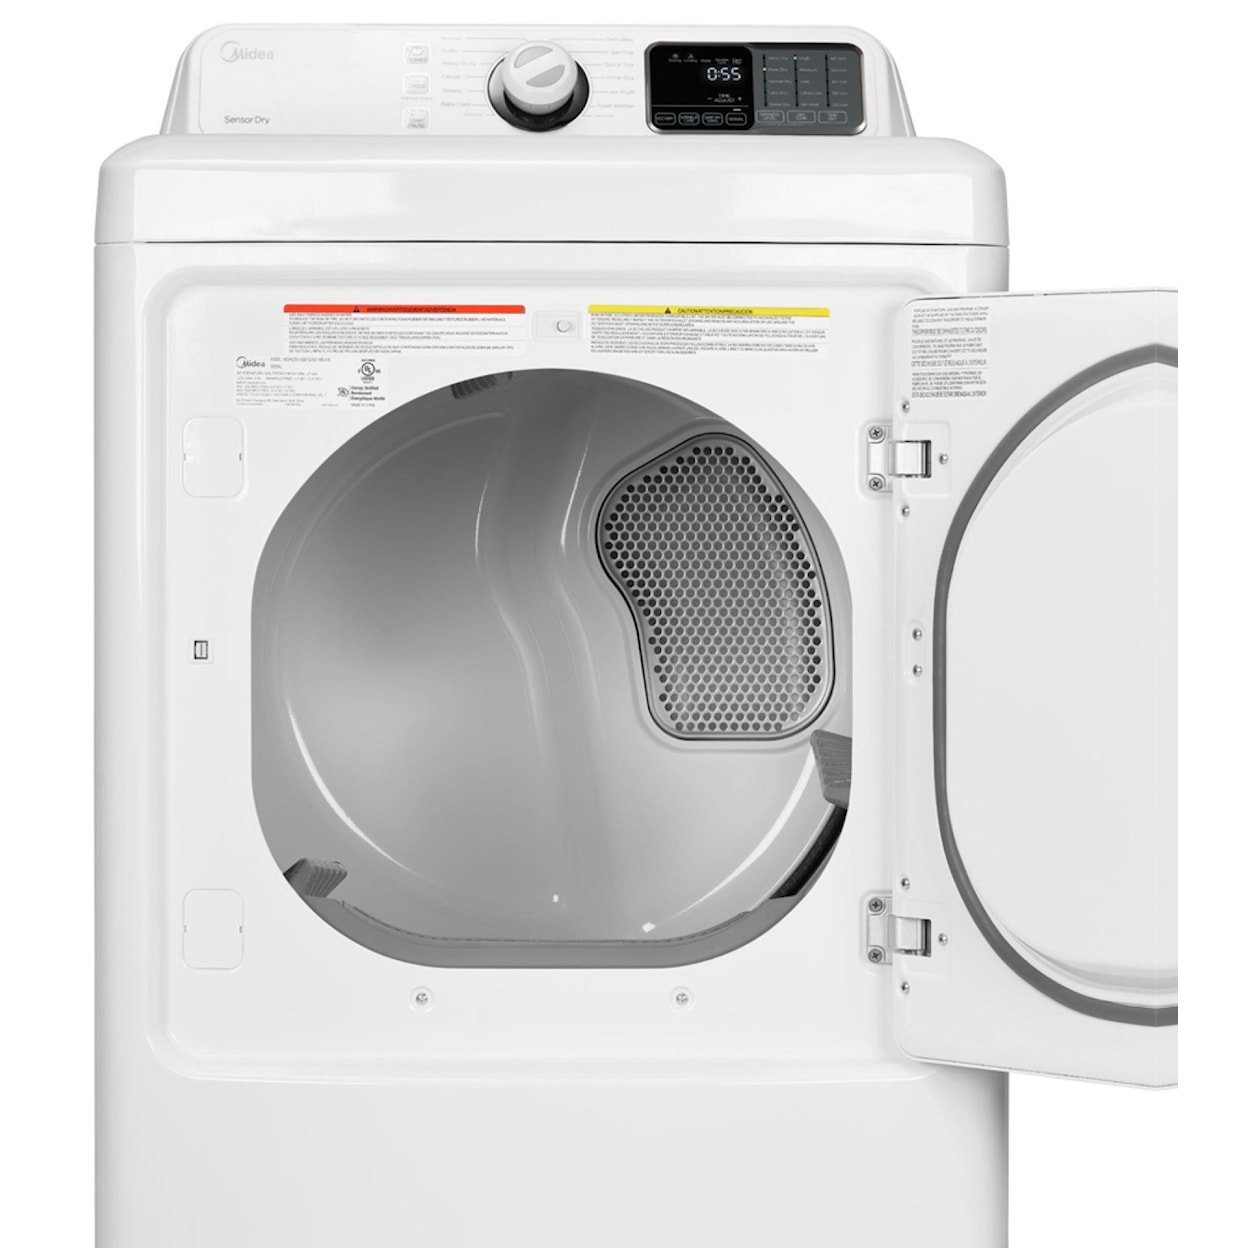 Midea Dryer 7.5 Cu Ft Electric Dryer with Sensor Dry